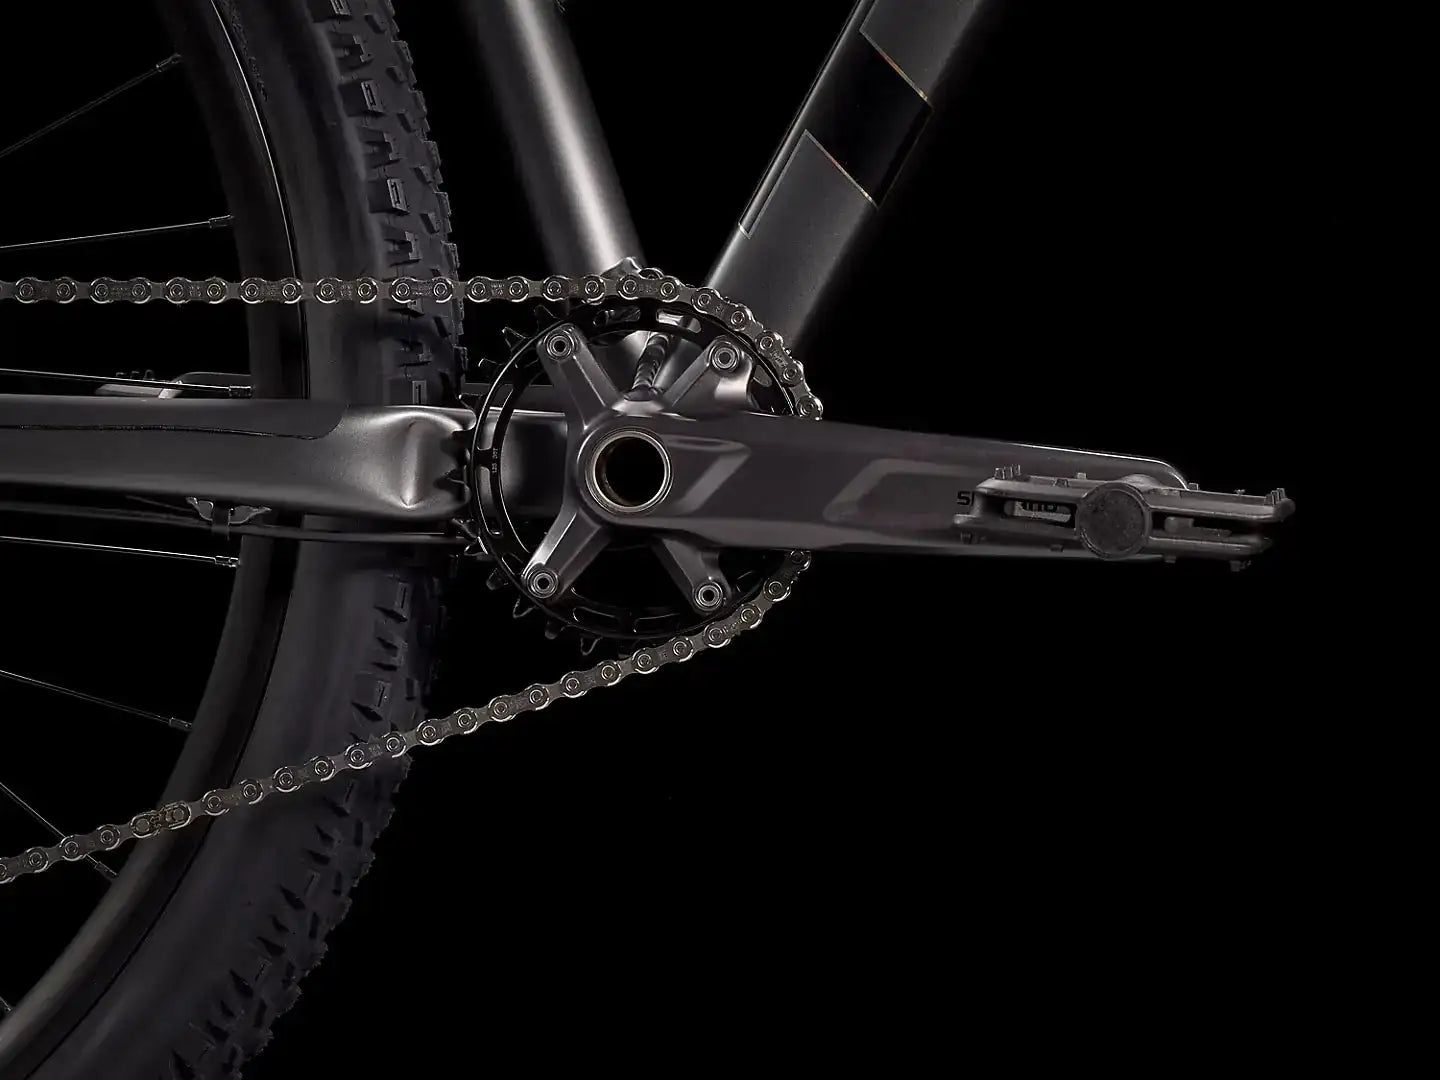 X-Caliber 8 Wheels Bikes